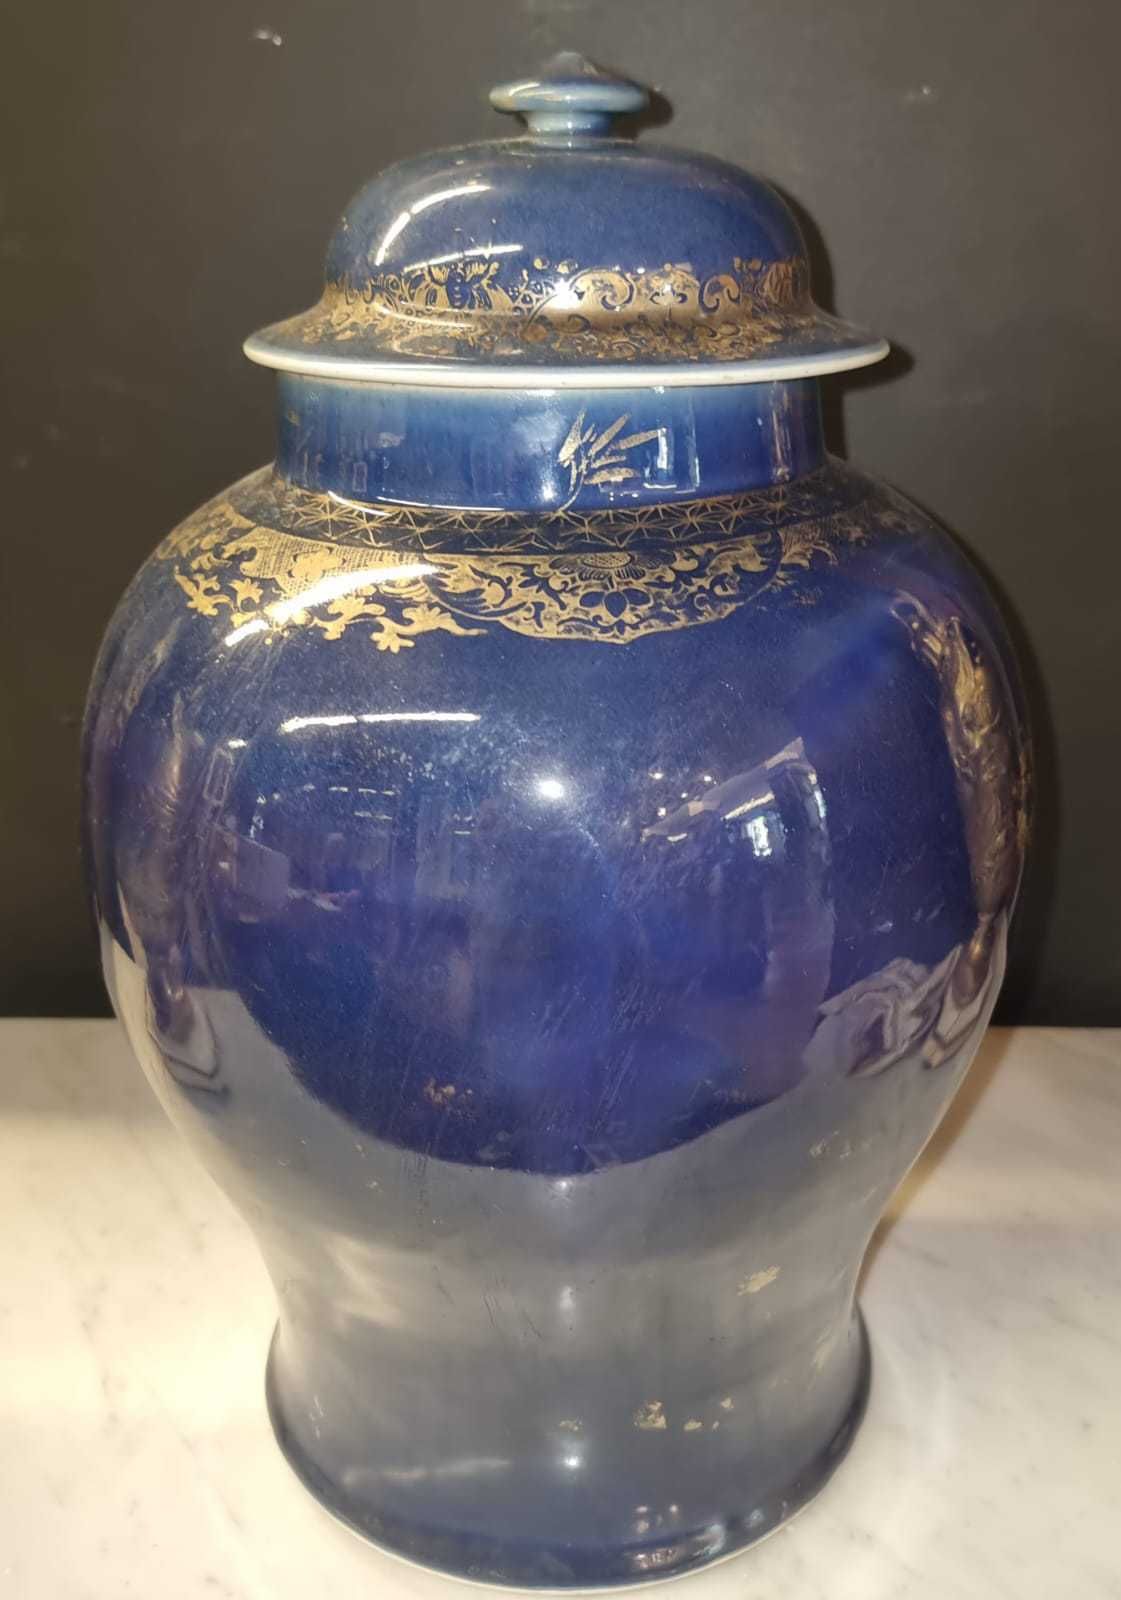 Null Vaso rivestito in porcellana 

Cina, periodo Kangxi 

H: 40 cm

*Venduto pe&hellip;